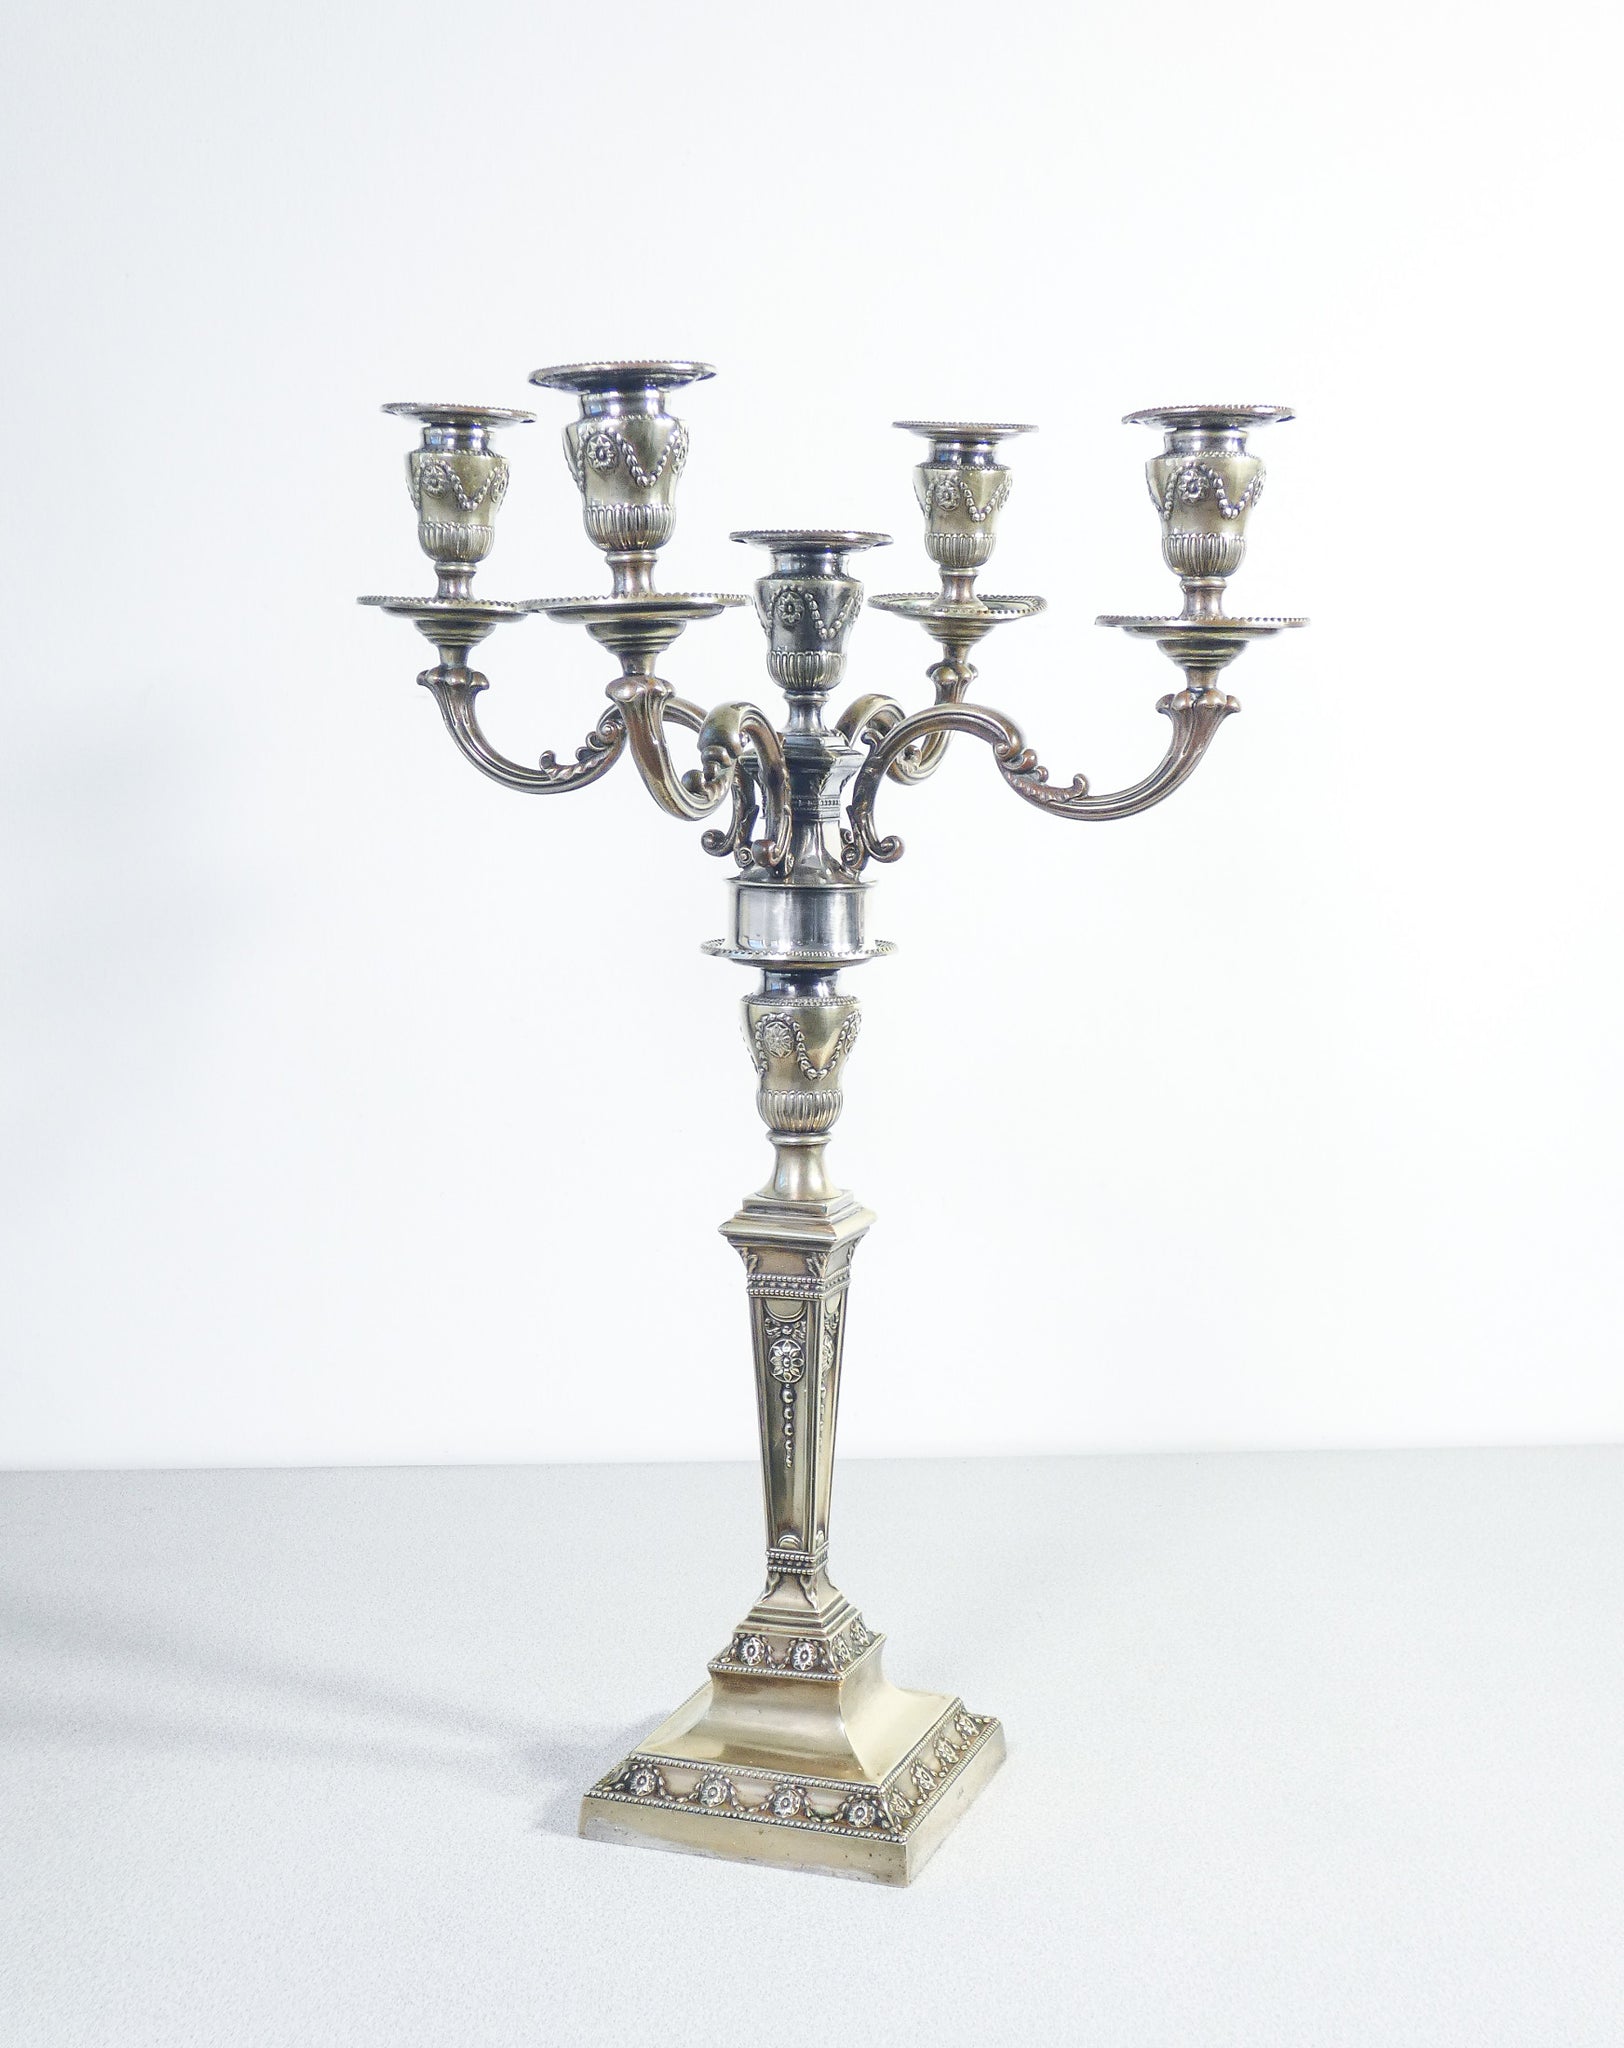 candelabro old sheffield 5 lumi placcato argento 1800 stile luigi xvi antico